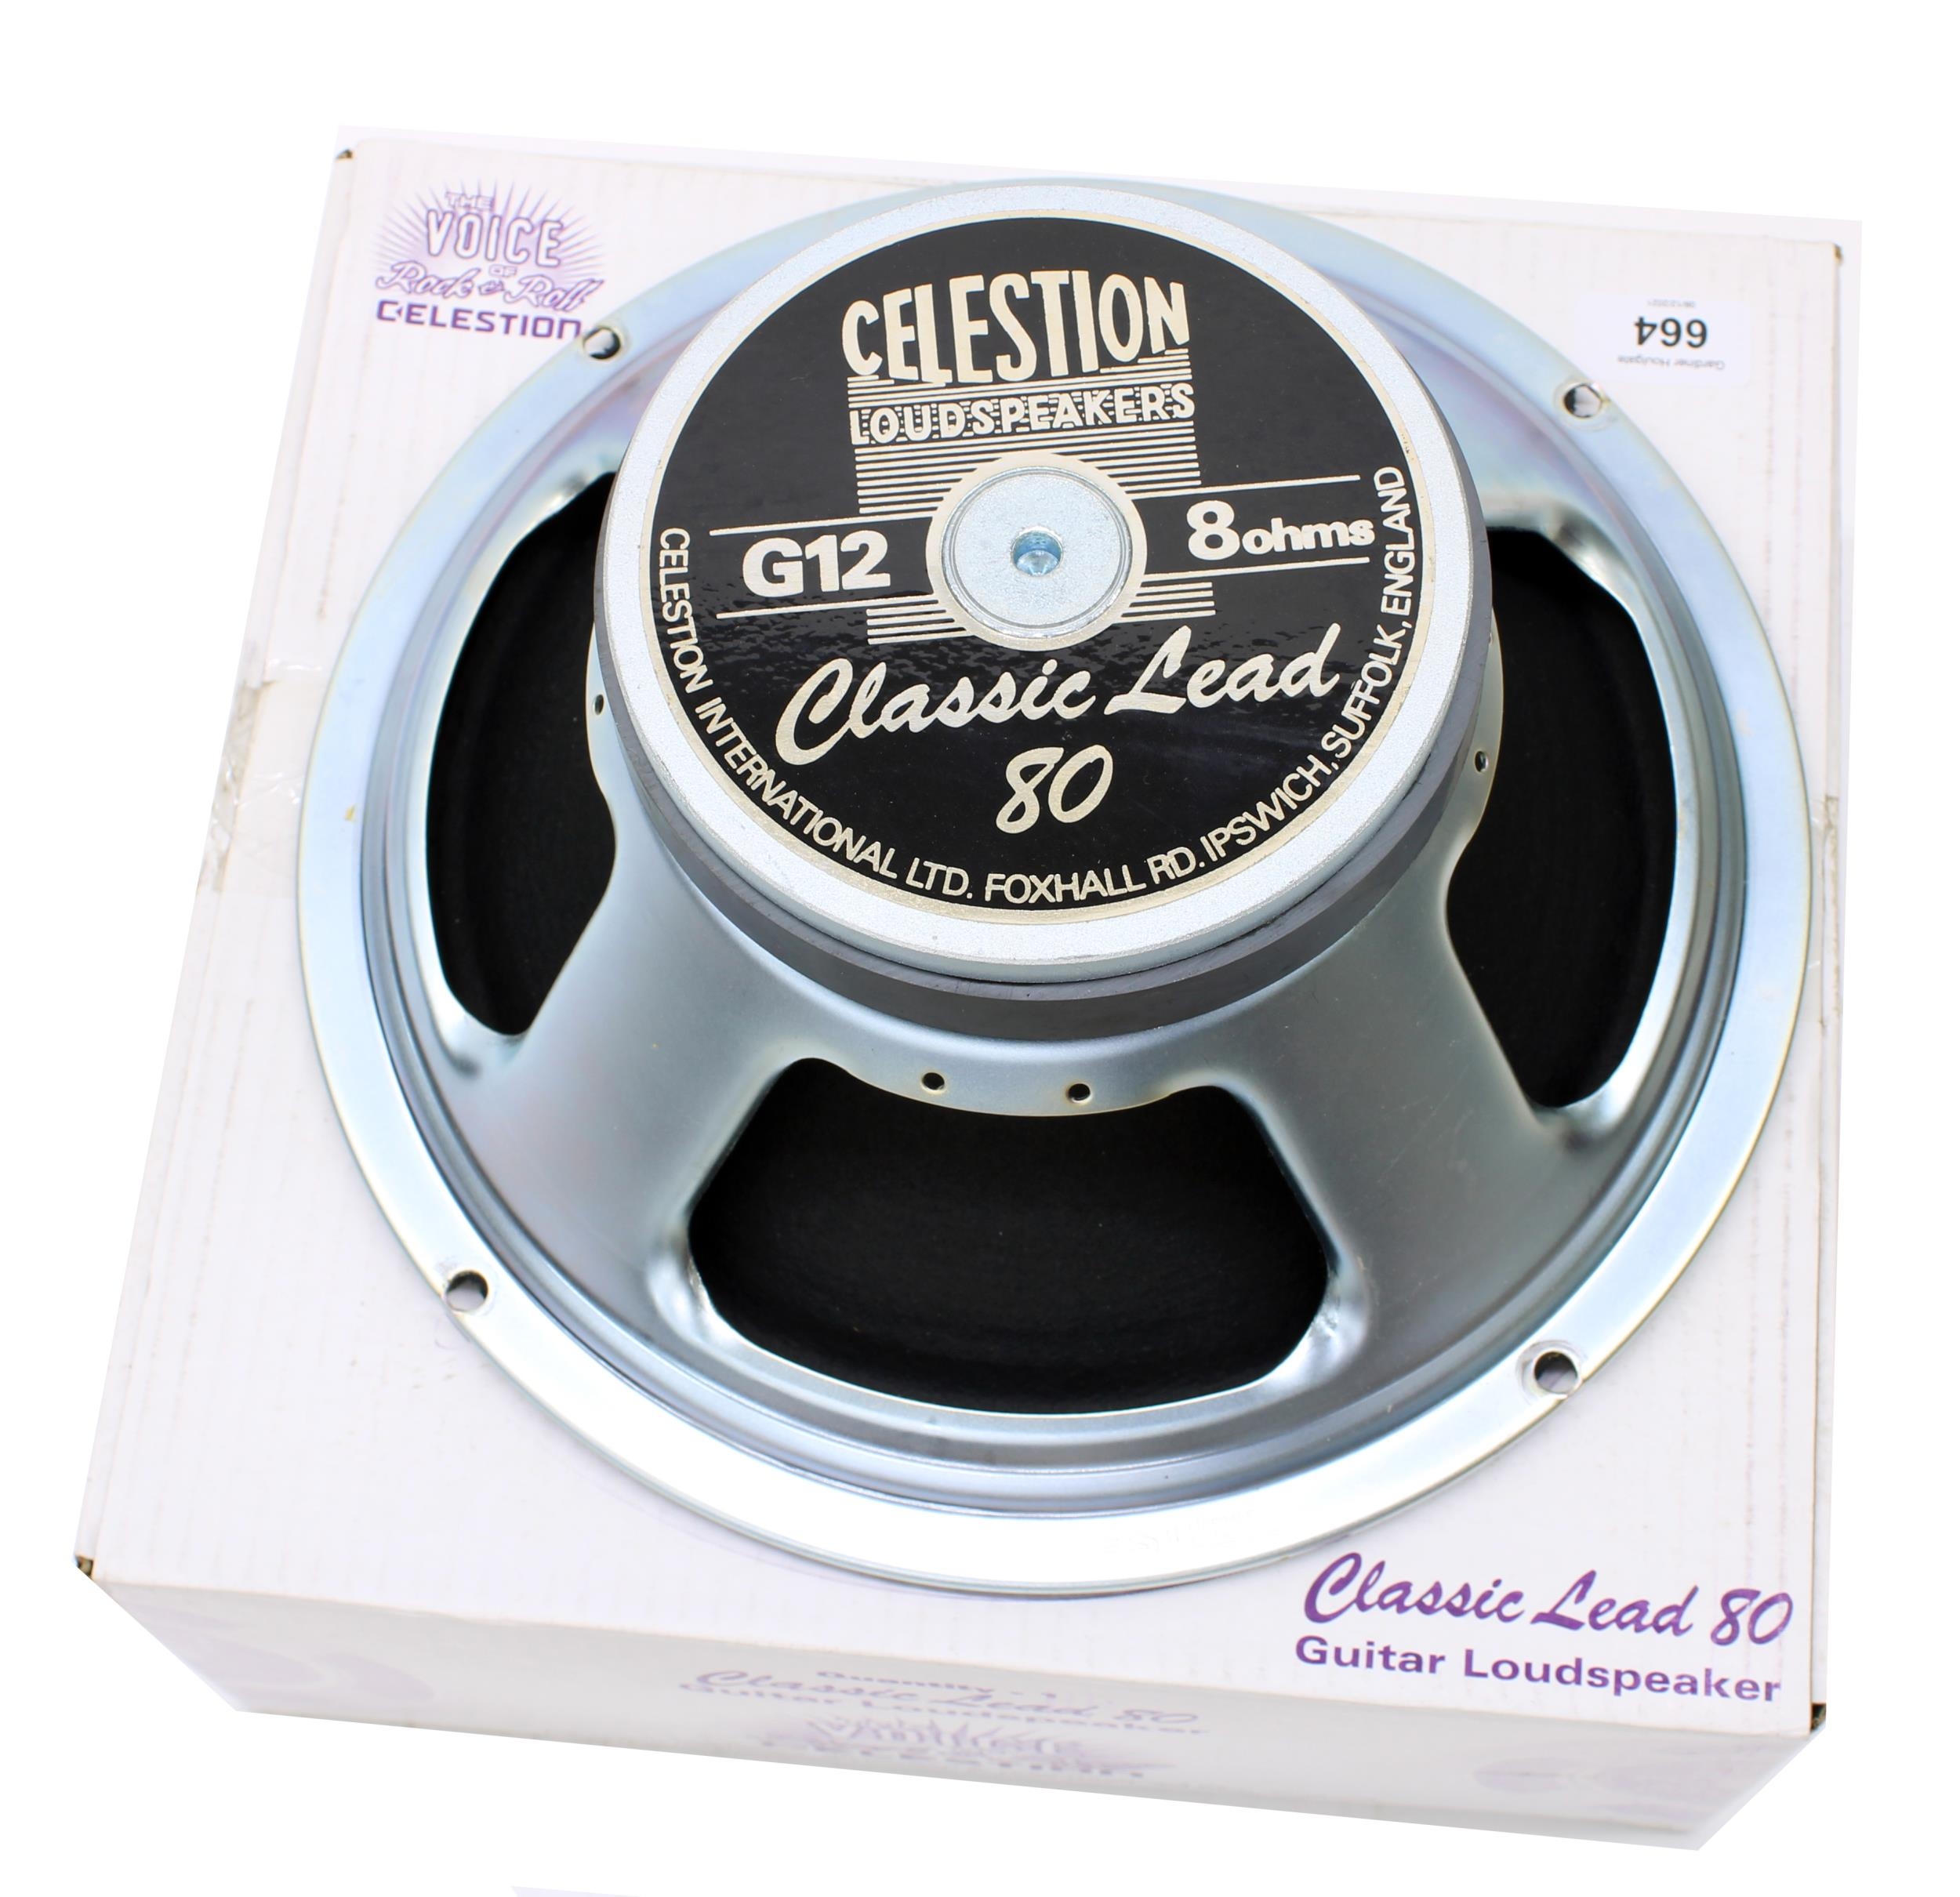 Celestion Classic Lead 80 8 ohm guitar amplifier speaker, boxed